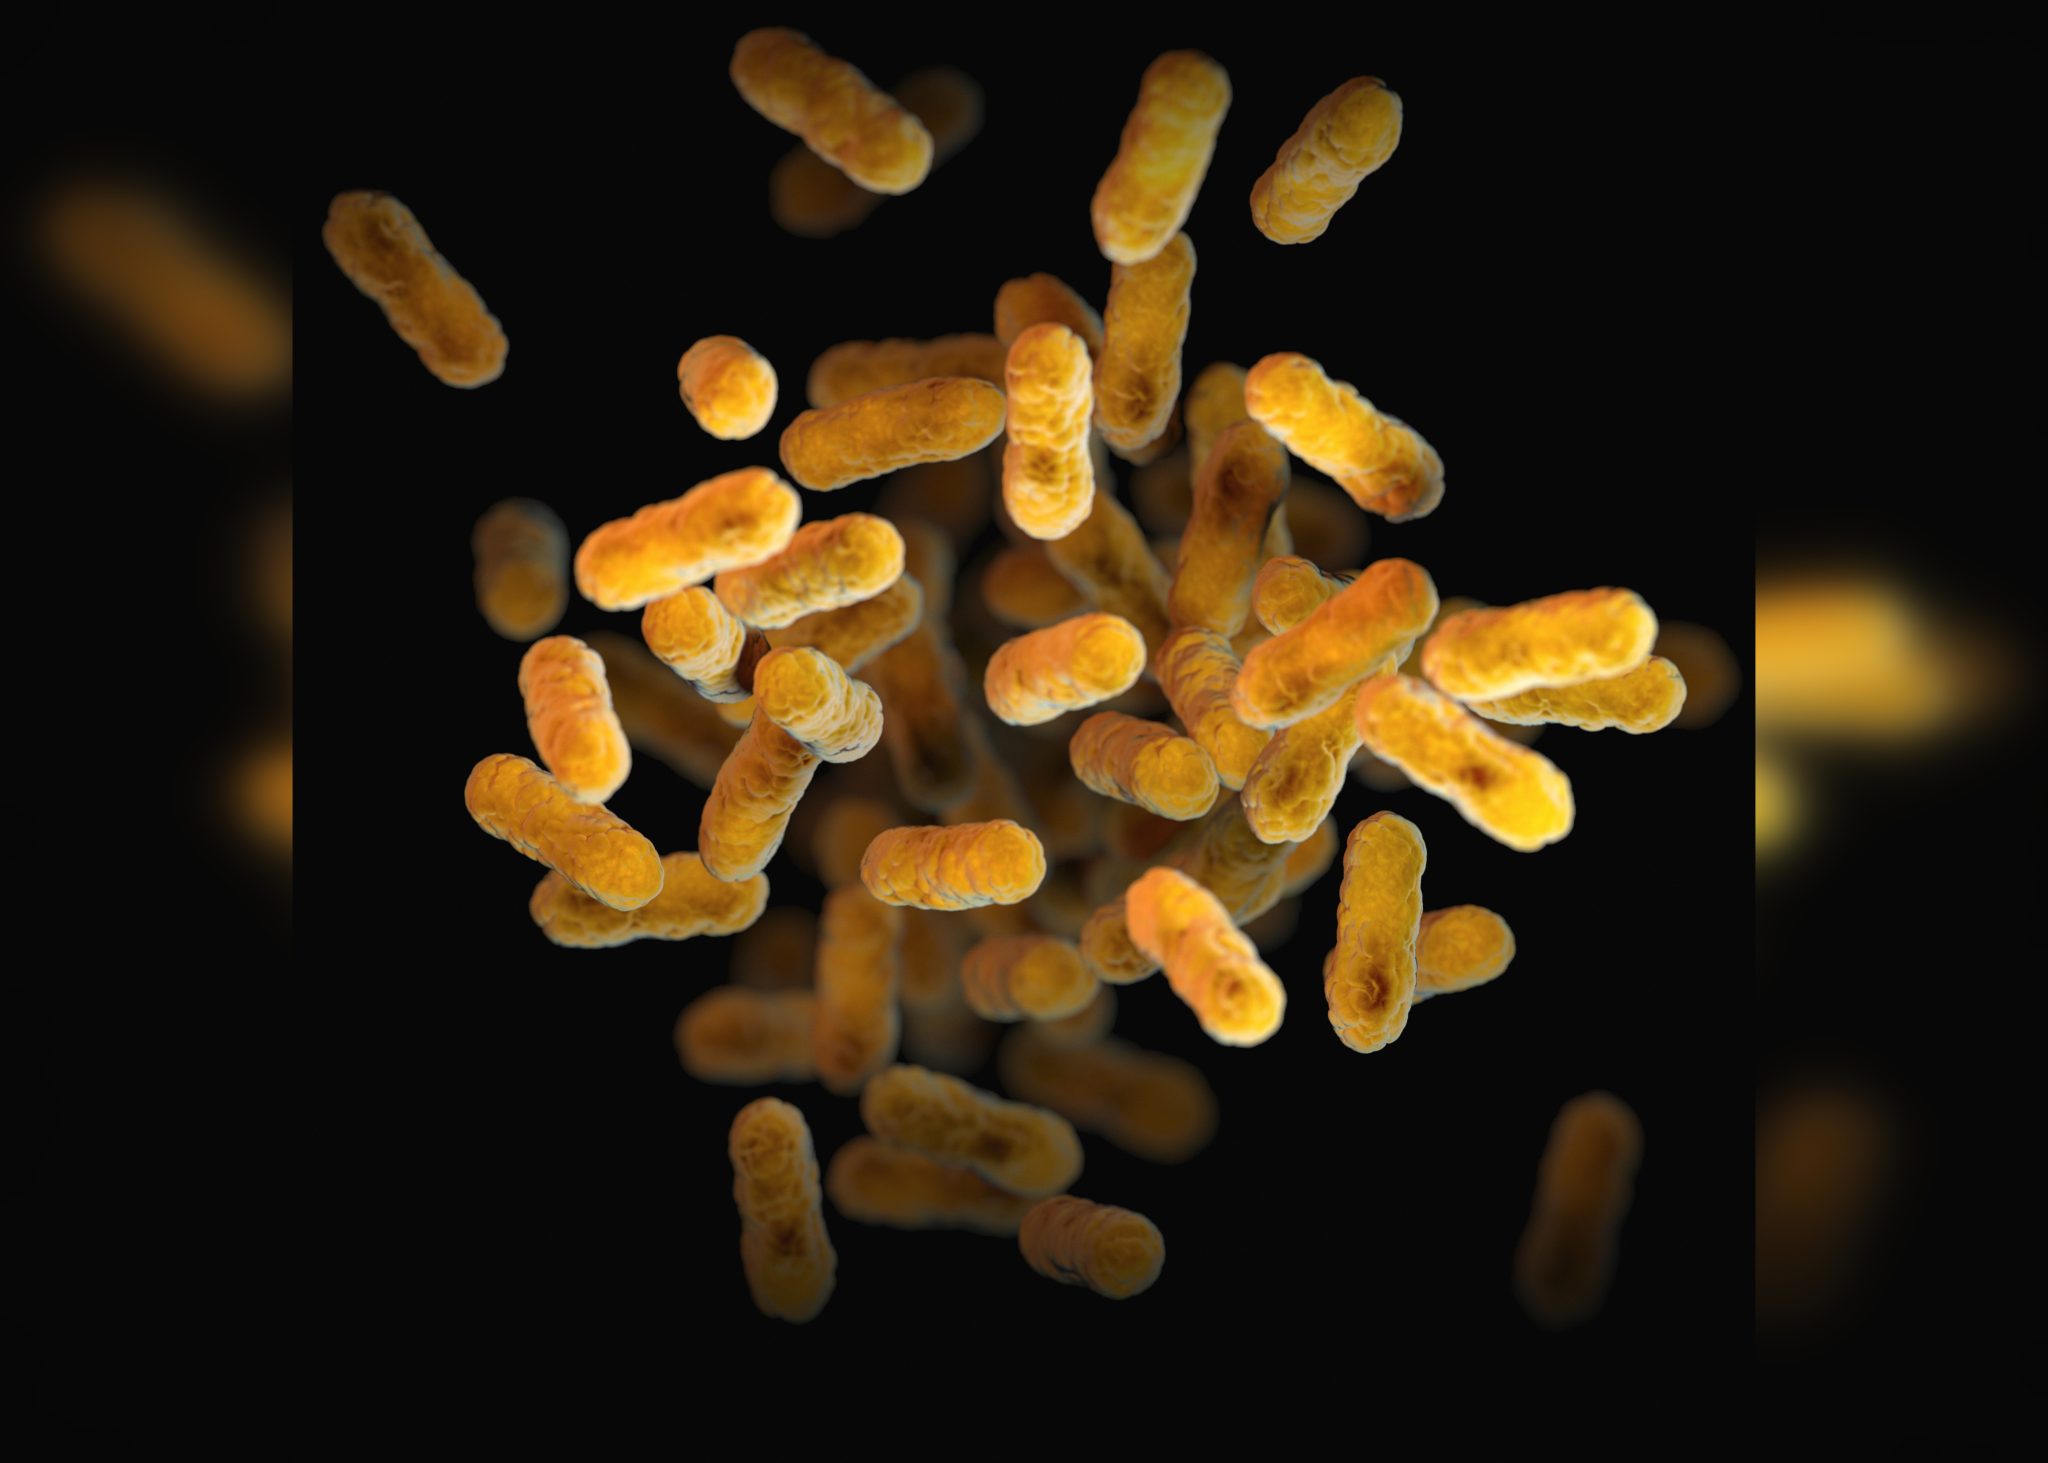 Бактерия Bordetella pertussis. Bordetella pertussis патогенность. Род Bordetella бактерии. Bordetella pertussis на казеиново-угольном агаре.